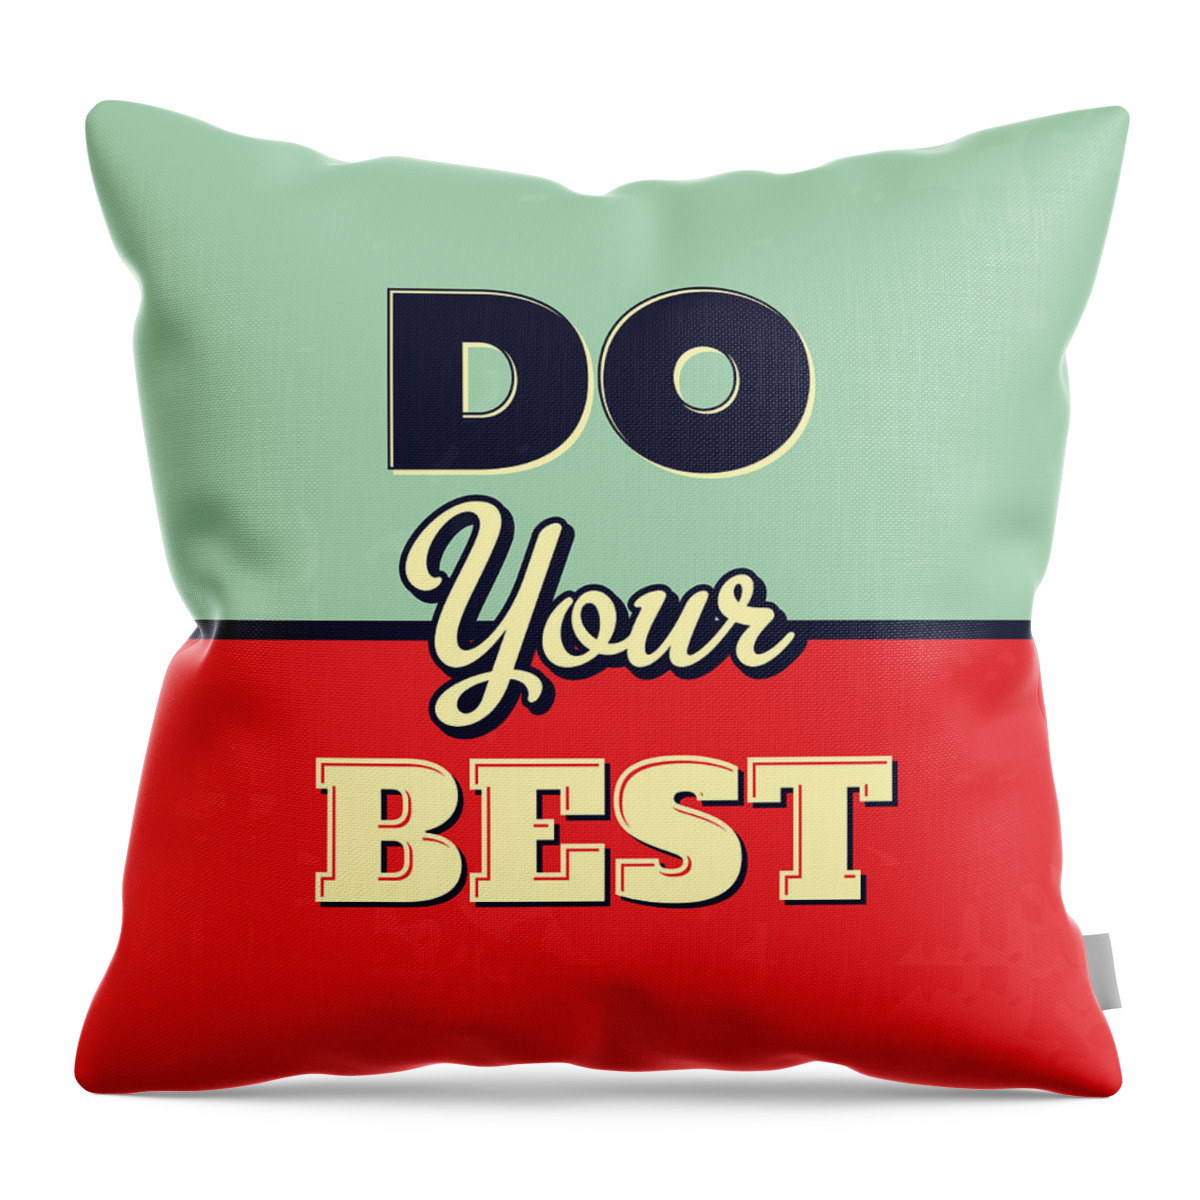 Motivational Throw Pillow featuring the digital art Do Your Best by Naxart Studio